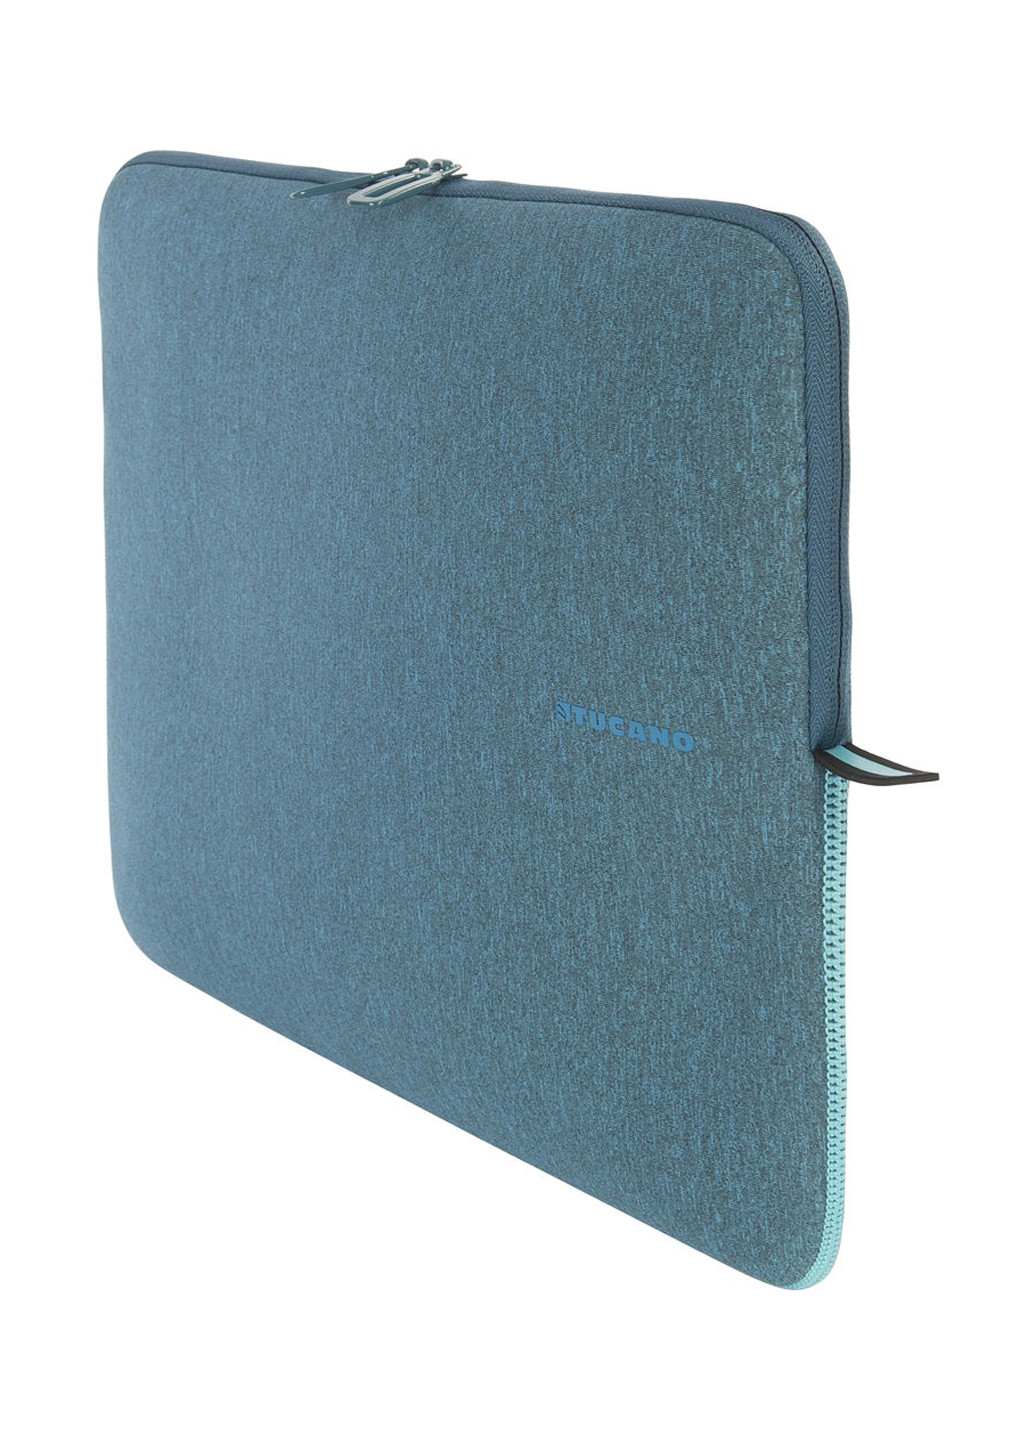 Чехол Melange для 15/16" ноутбуков (голубой) Tucano bfm1516-z (133591116)